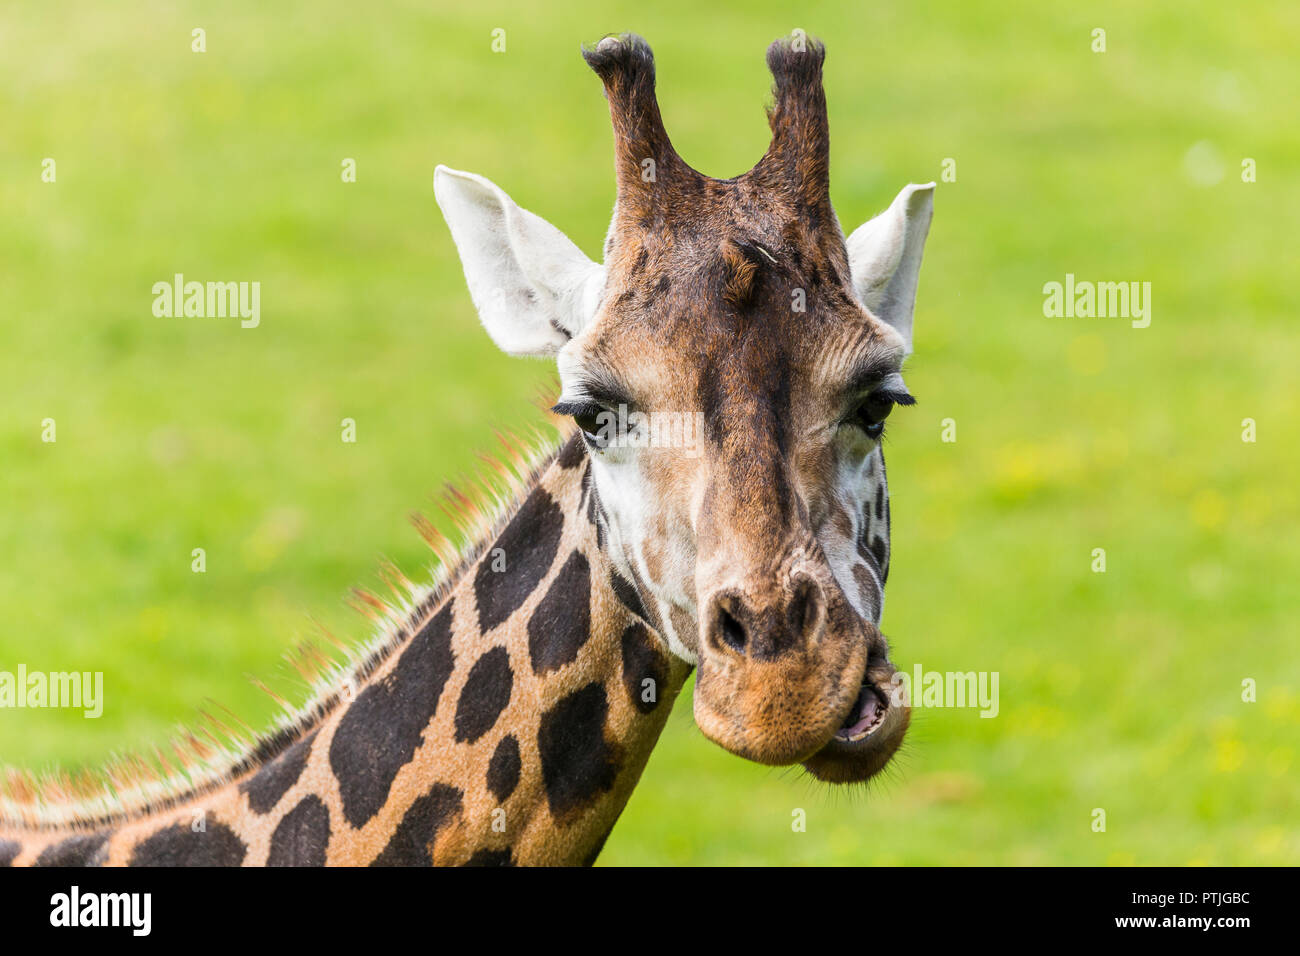 Giraffe chewing its food. Stock Photo